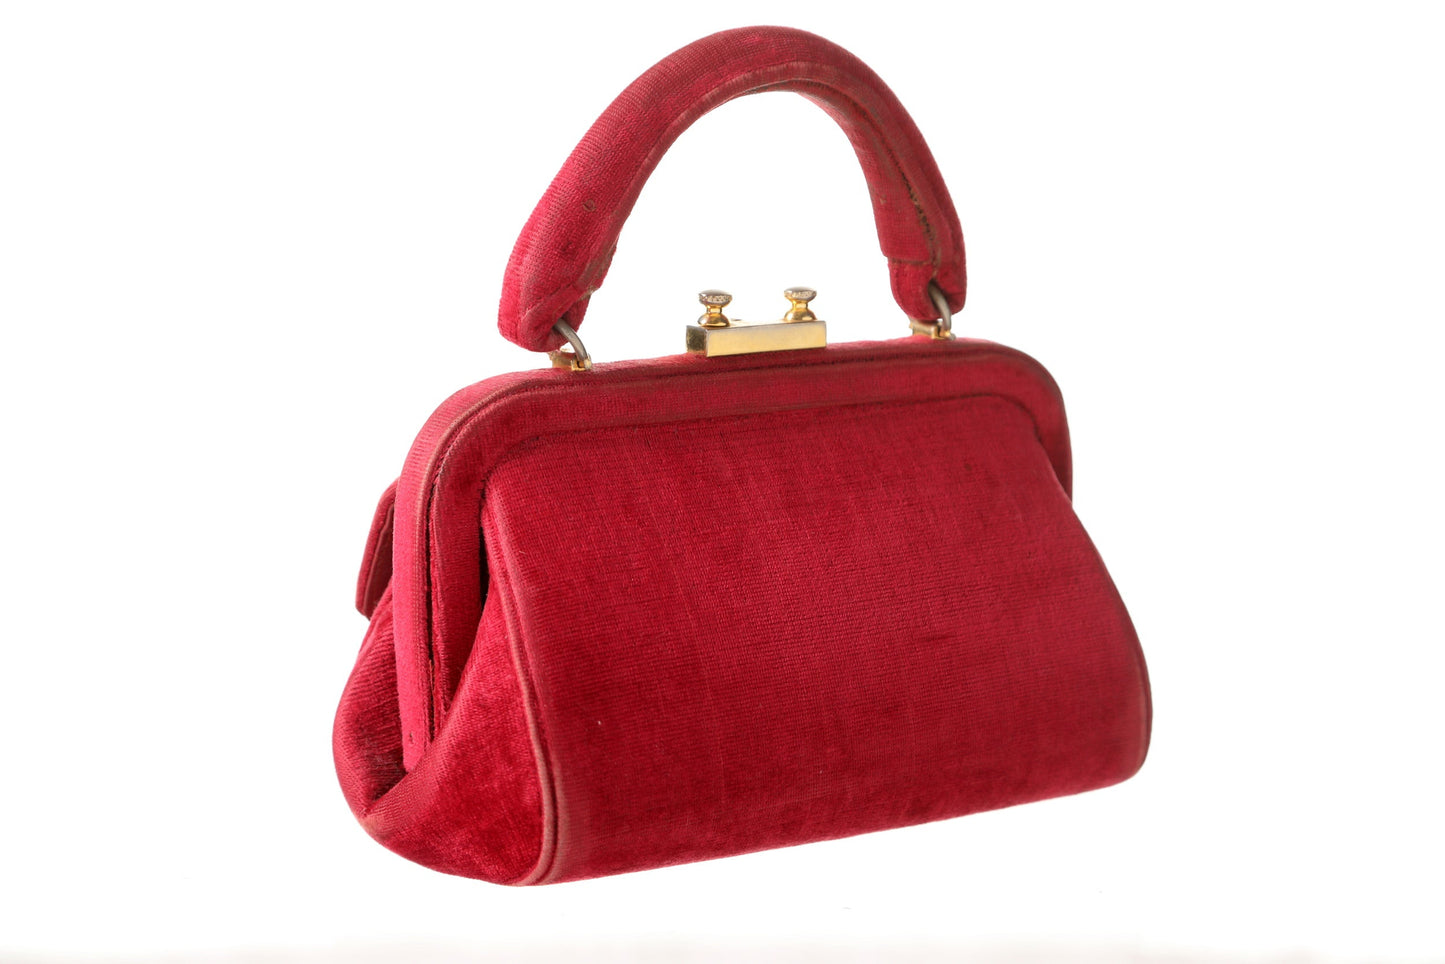 Roberta di Camerino Bordeaux handbag